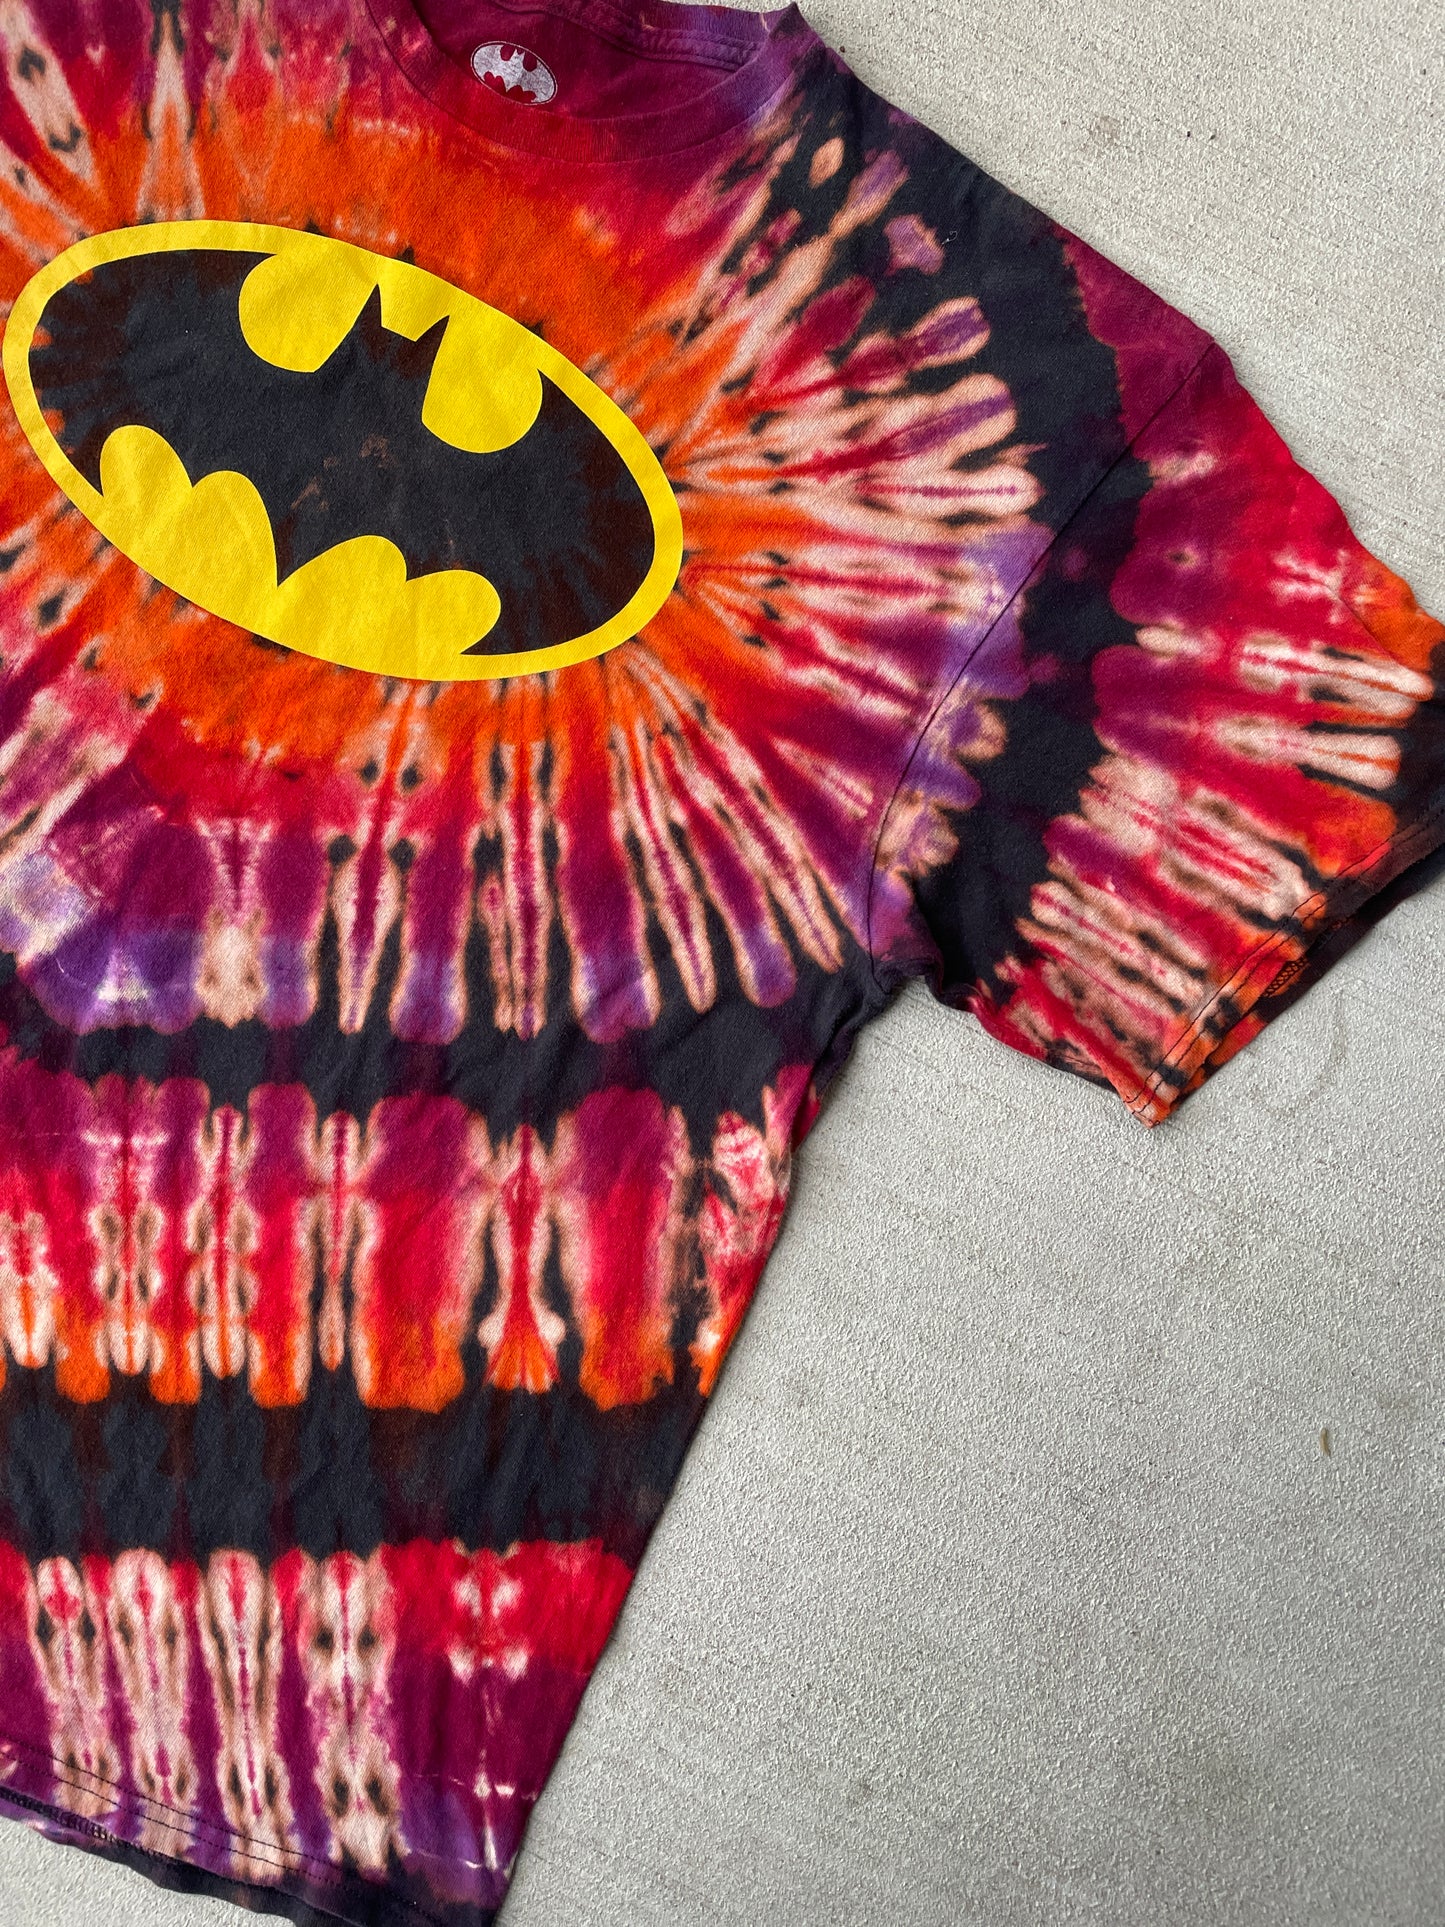 2XL Men’s Batman Handmade Tie Dye T-Shirt | Black and Red Reverse Tie Dye Short Sleeve